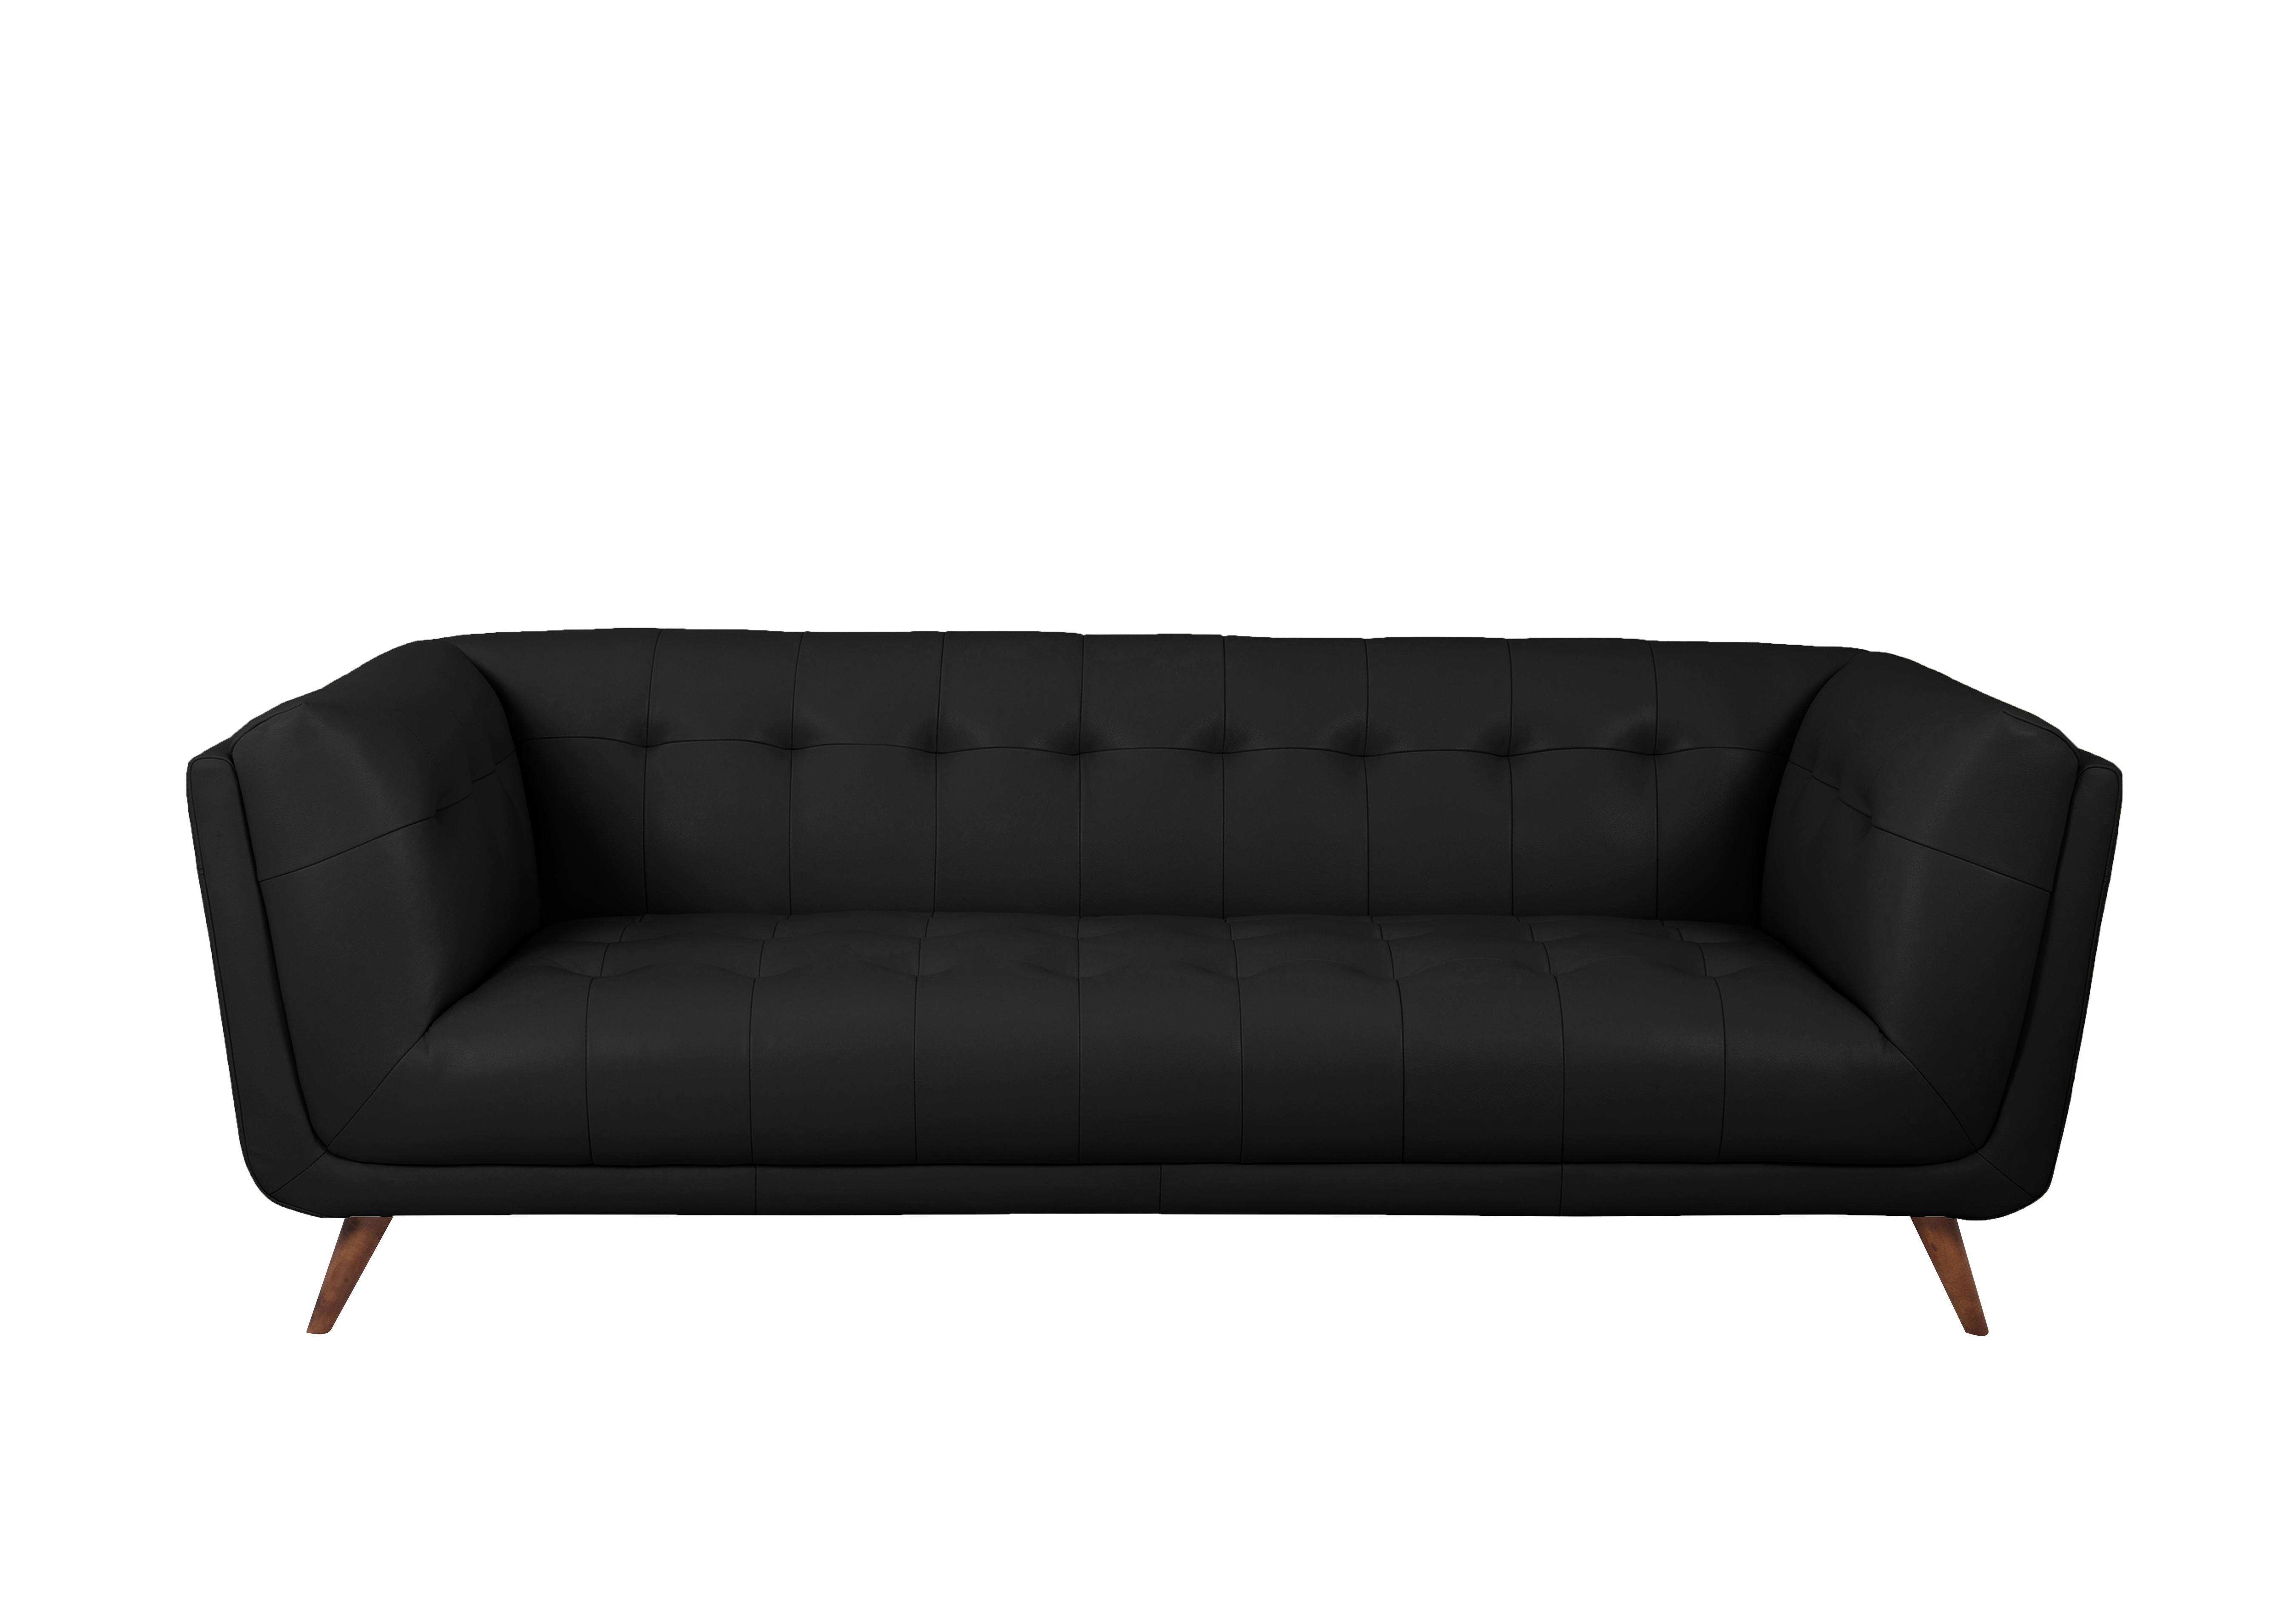 Rene 3 Seater Leather Sofa in Florida Black on Furniture Village